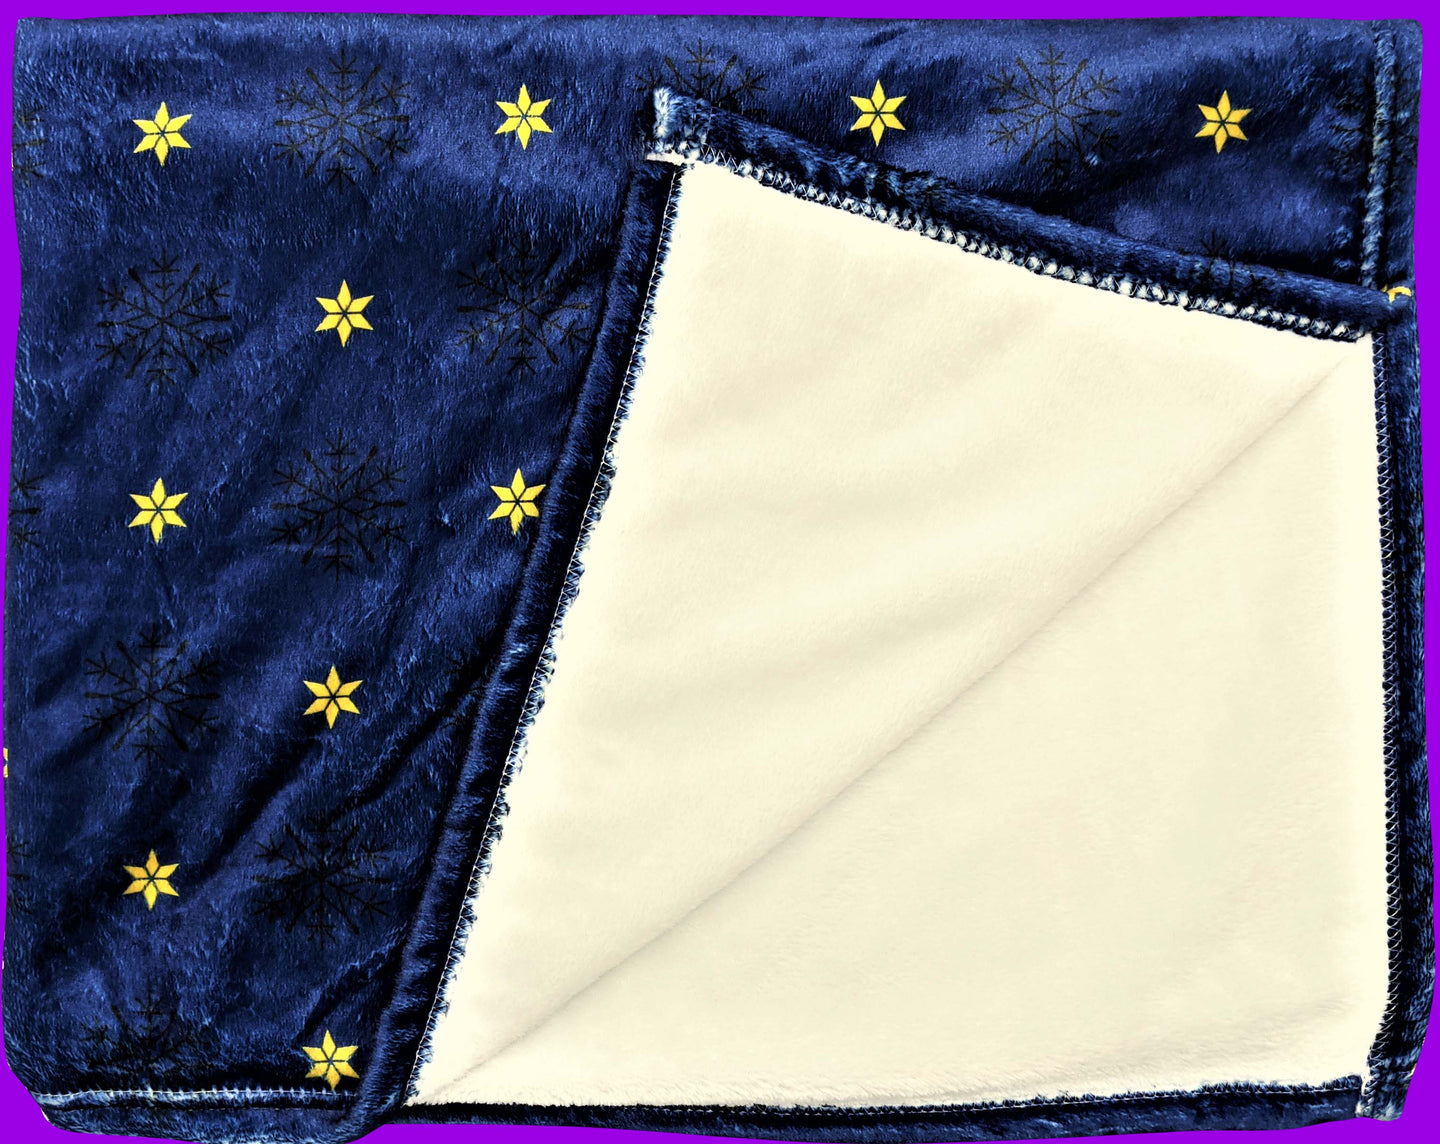 Blankets - Photo blankets, or custom file blankets